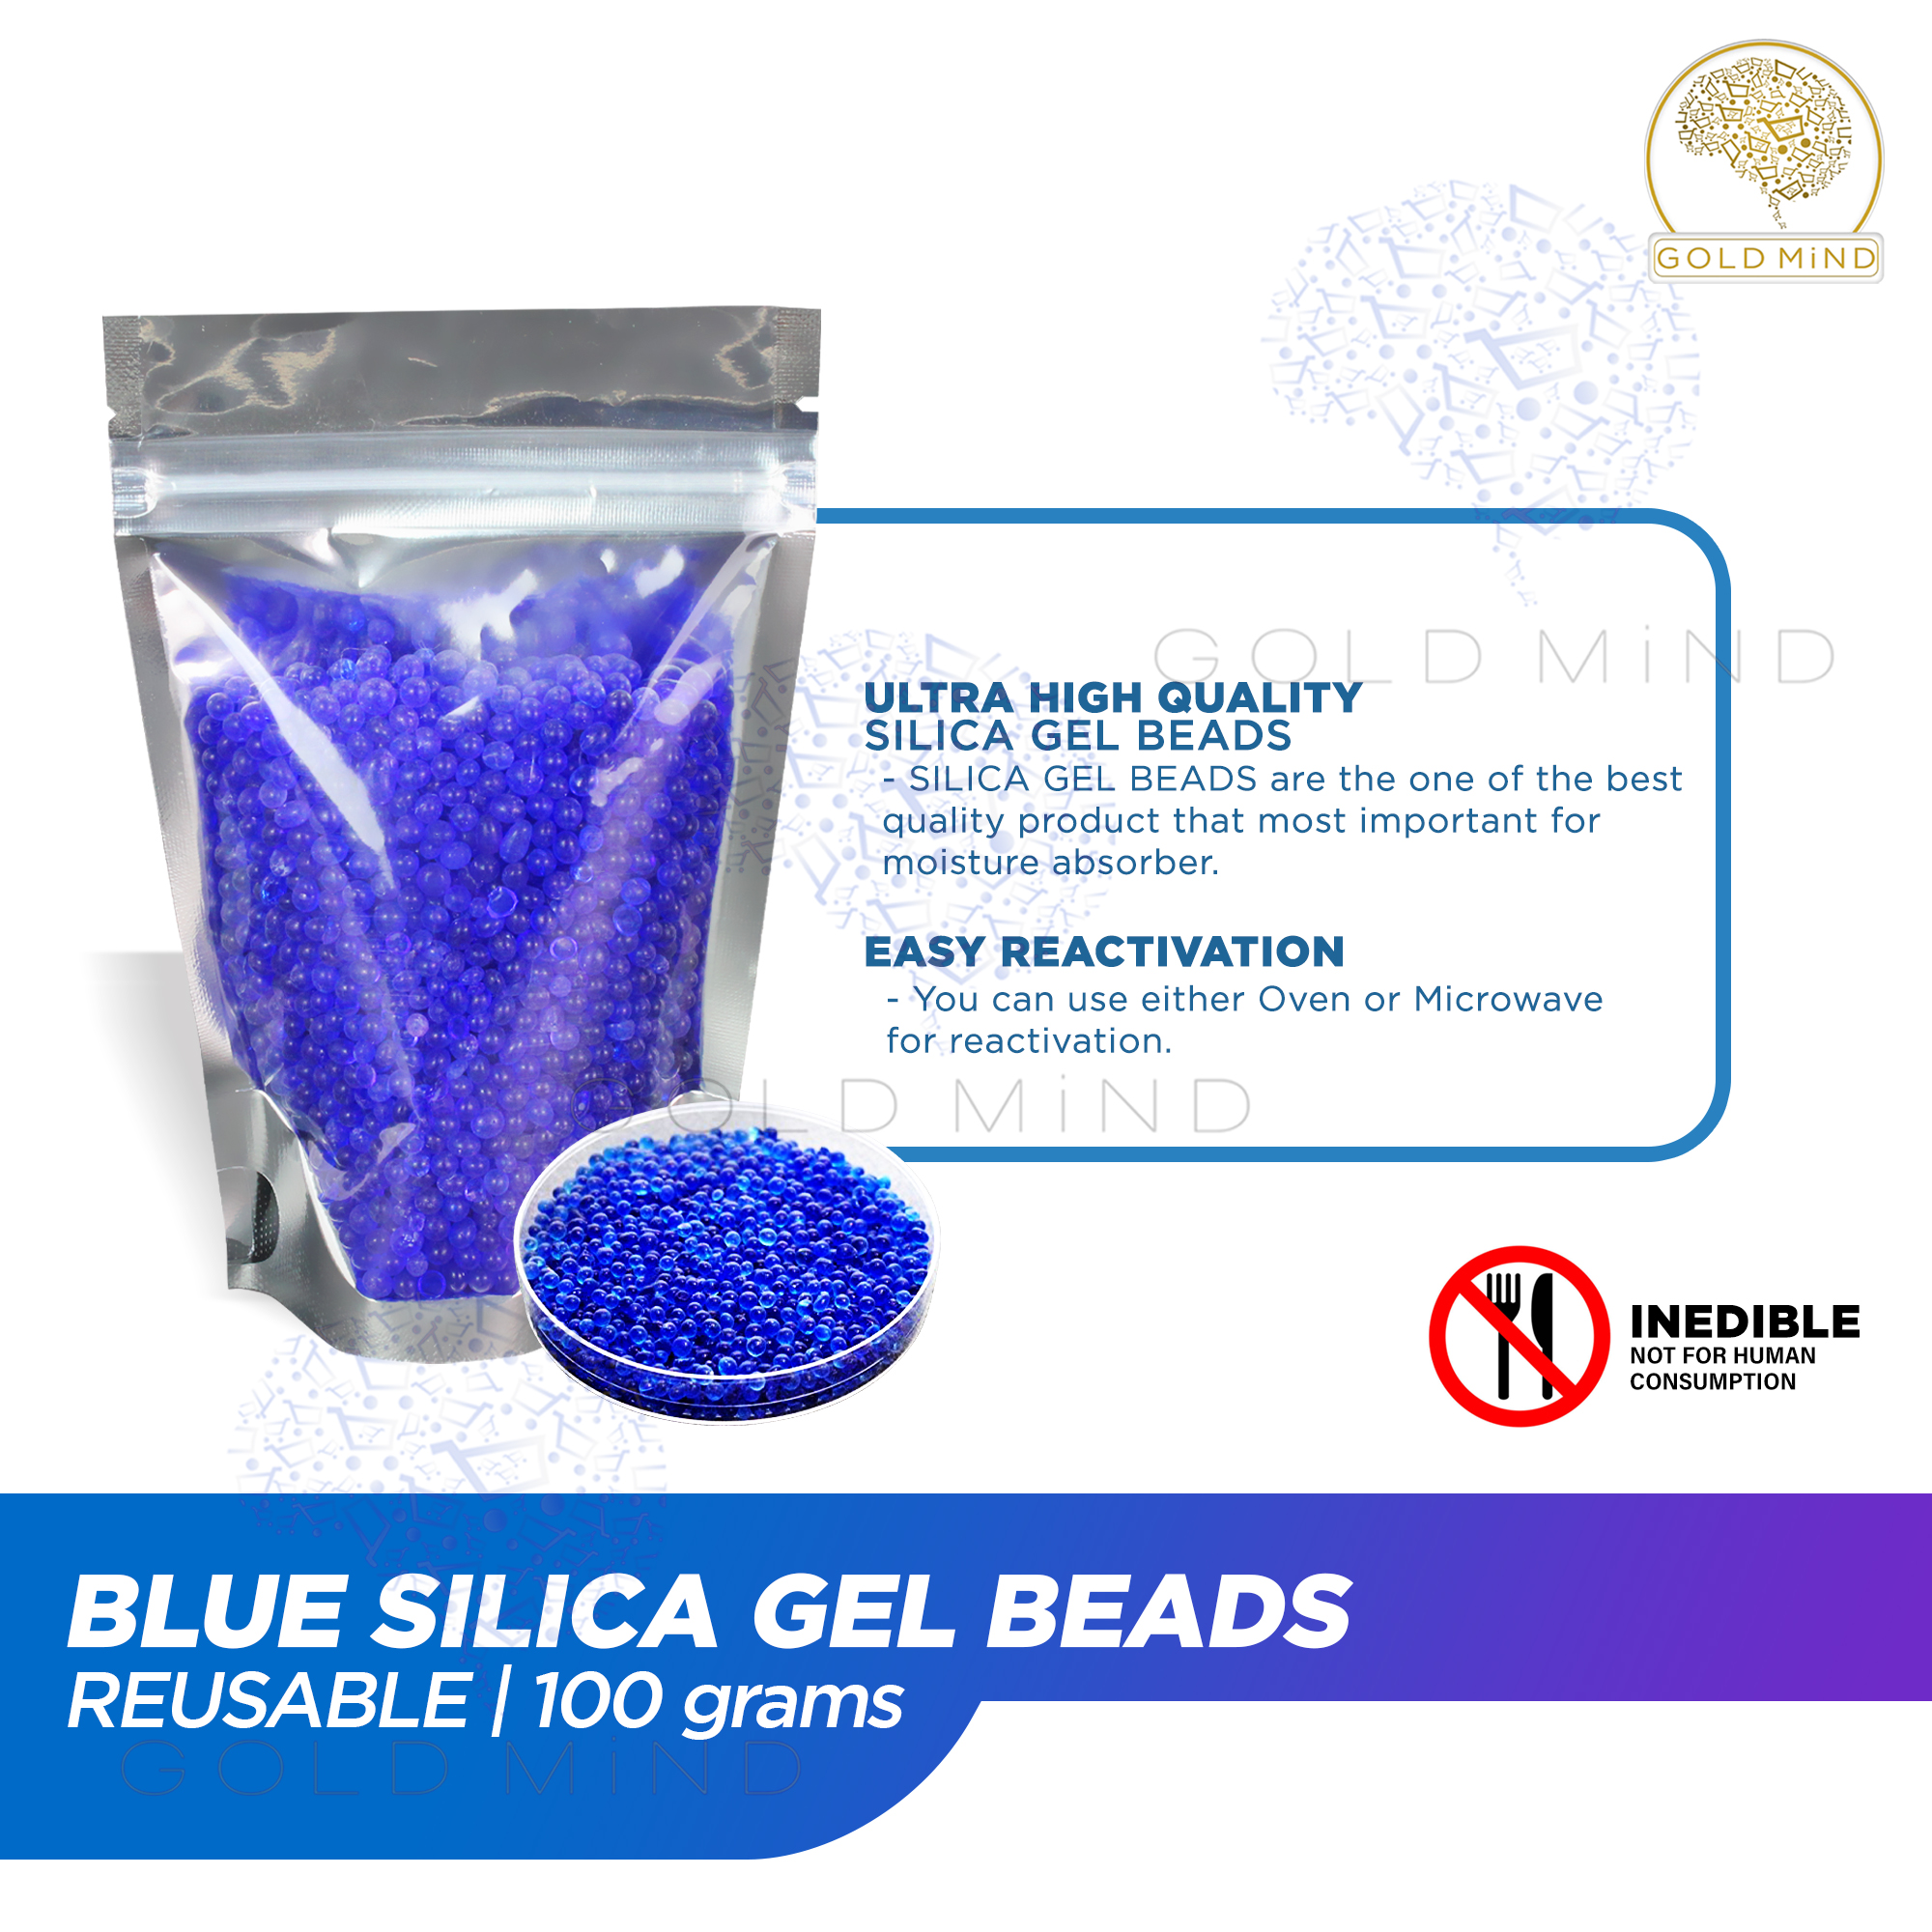 Reusable Silica Gel Bead Blue 100g Premium Moisture Absorber, Dehumidifier